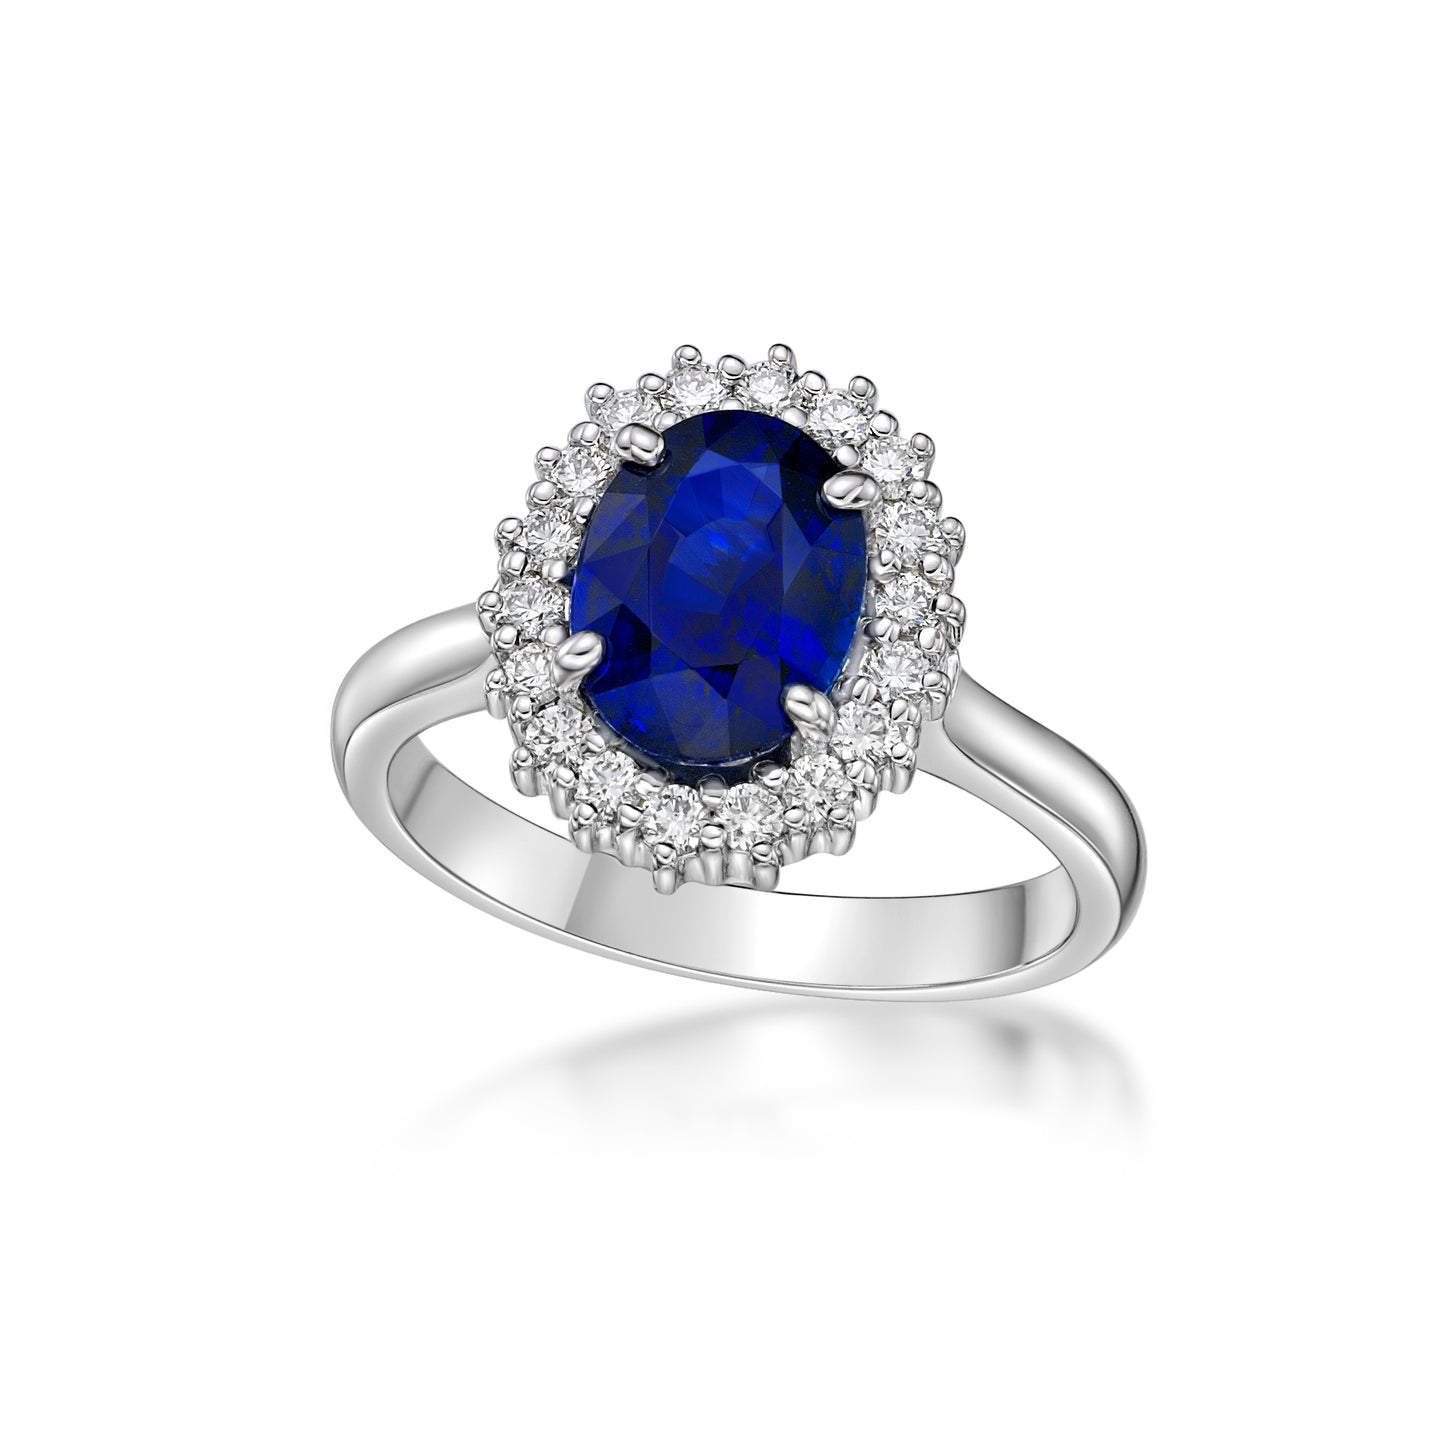 2.04ct Oval Sri-Lankan Blue Sapphire Ring in an 18K White Gold Floral Diamond Halo of round brilliant diamonds